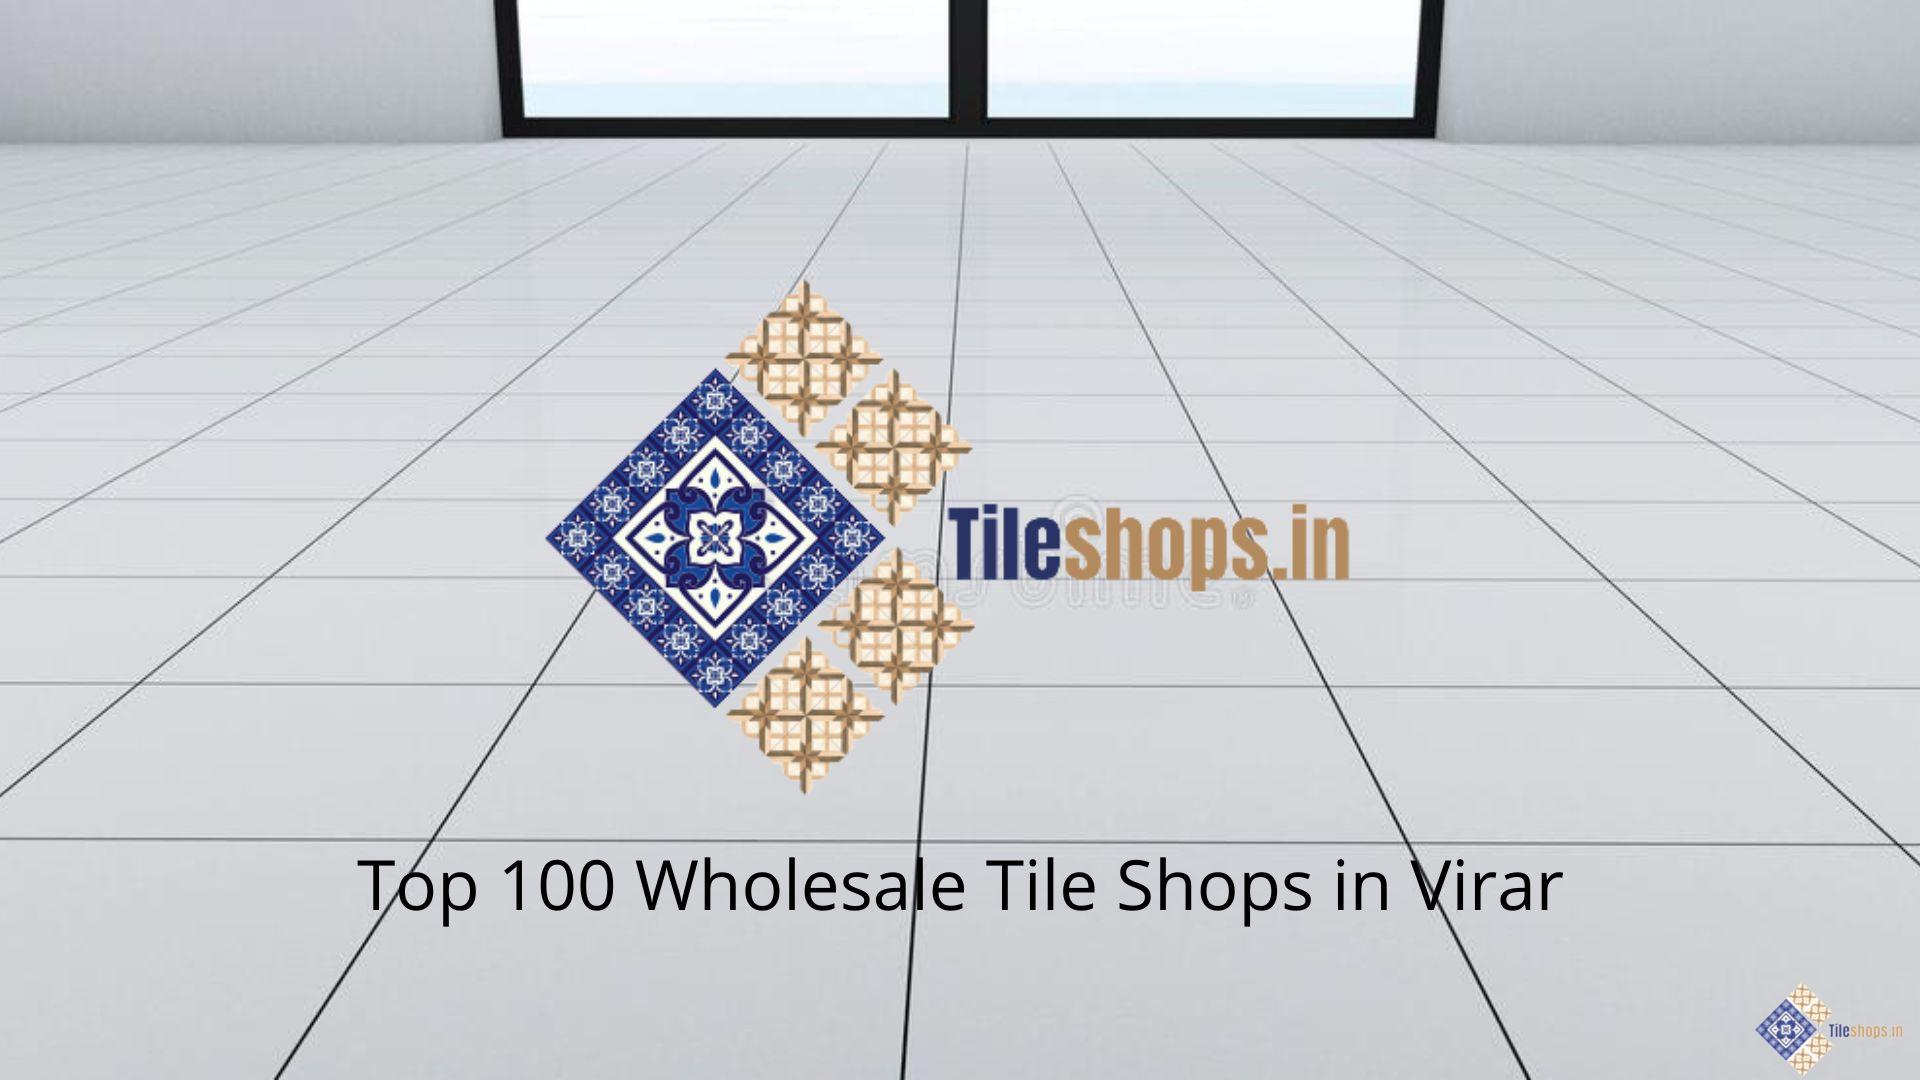 Top 100 Wholesale Tile Shops in Virar